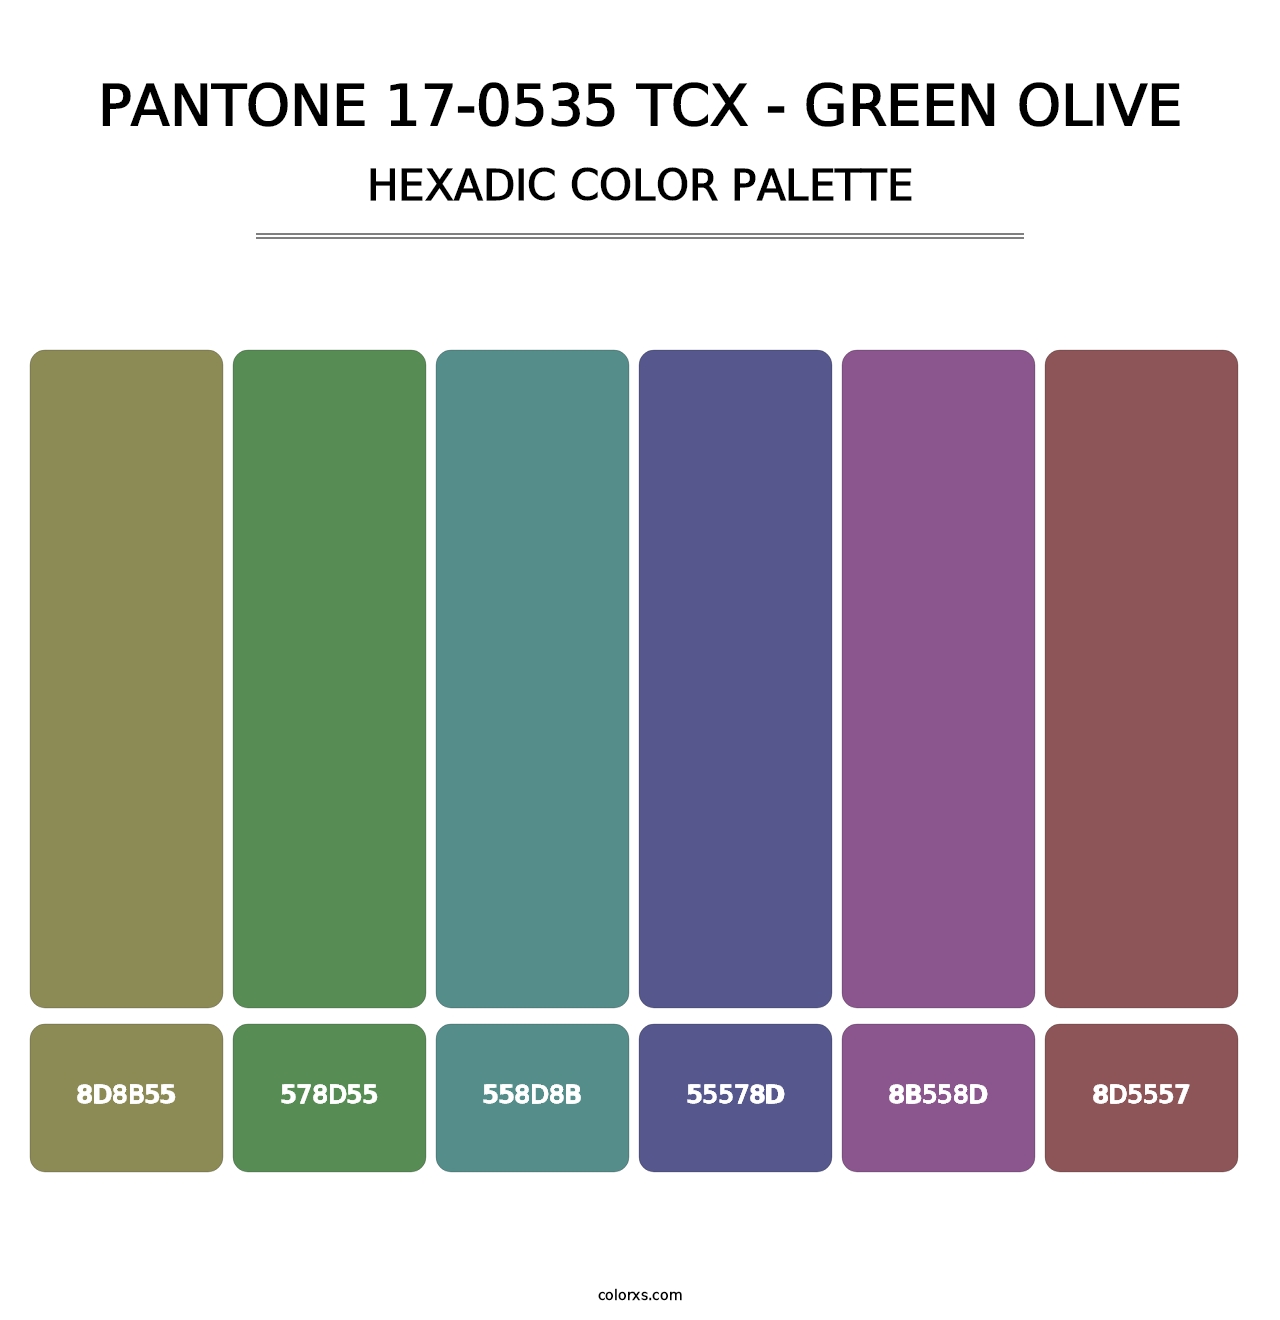 PANTONE 17-0535 TCX - Green Olive - Hexadic Color Palette